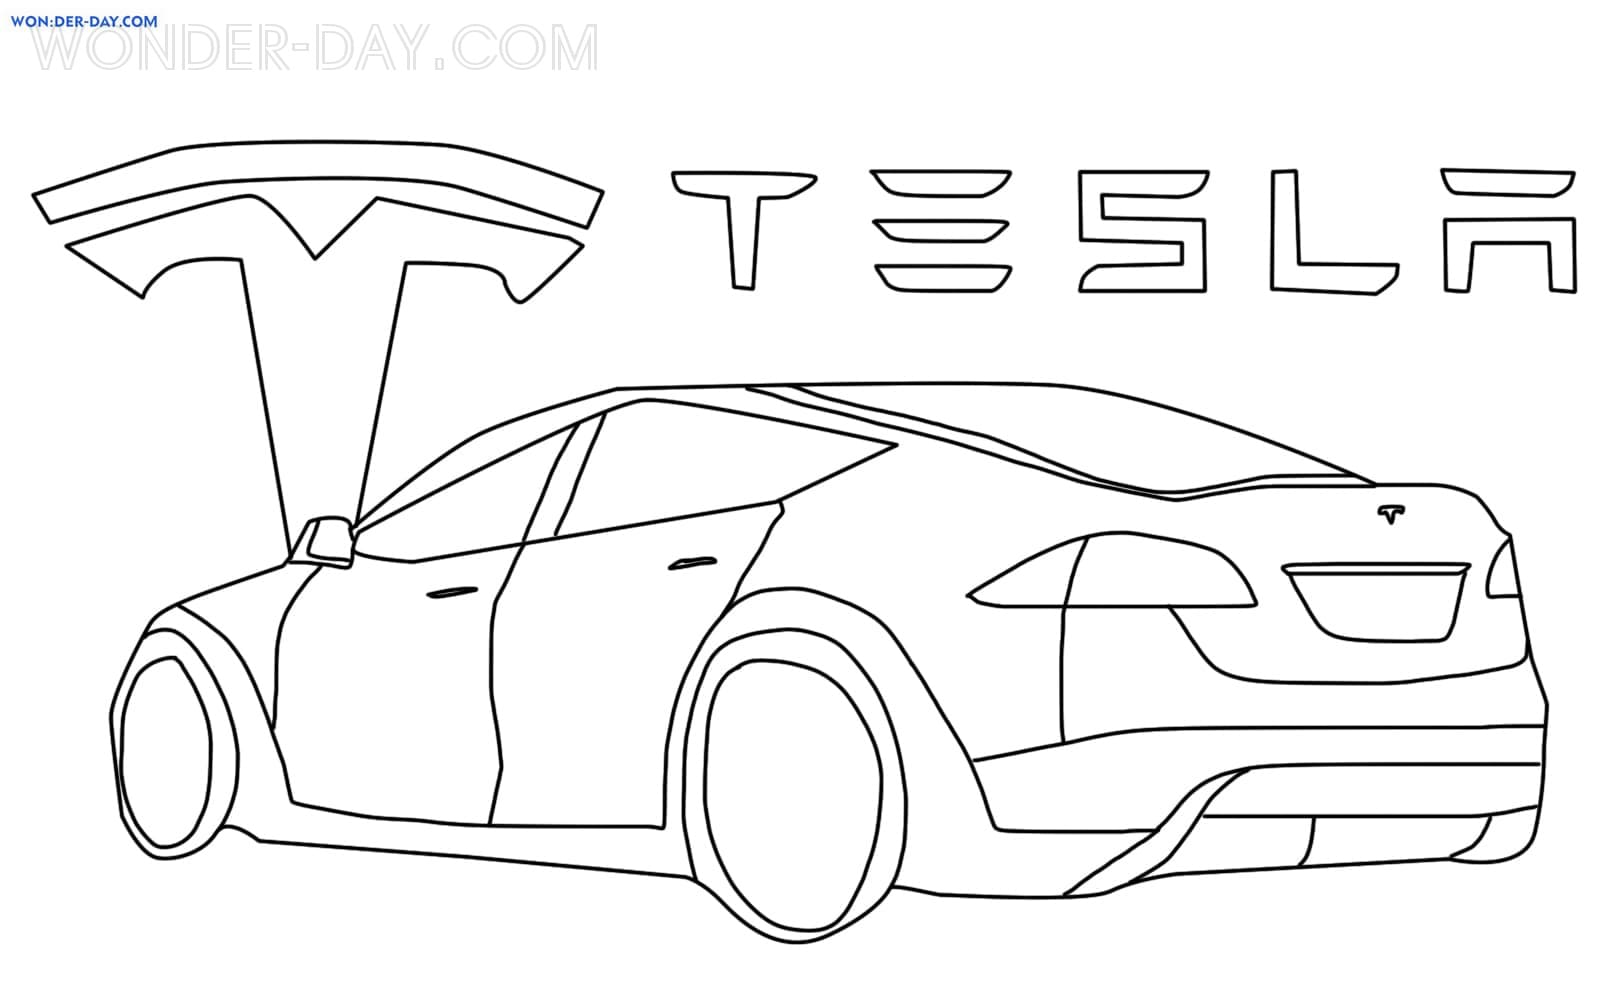 Dibujos De Tesla Para Colorear Dibujos Para Colorear Para Ni Os